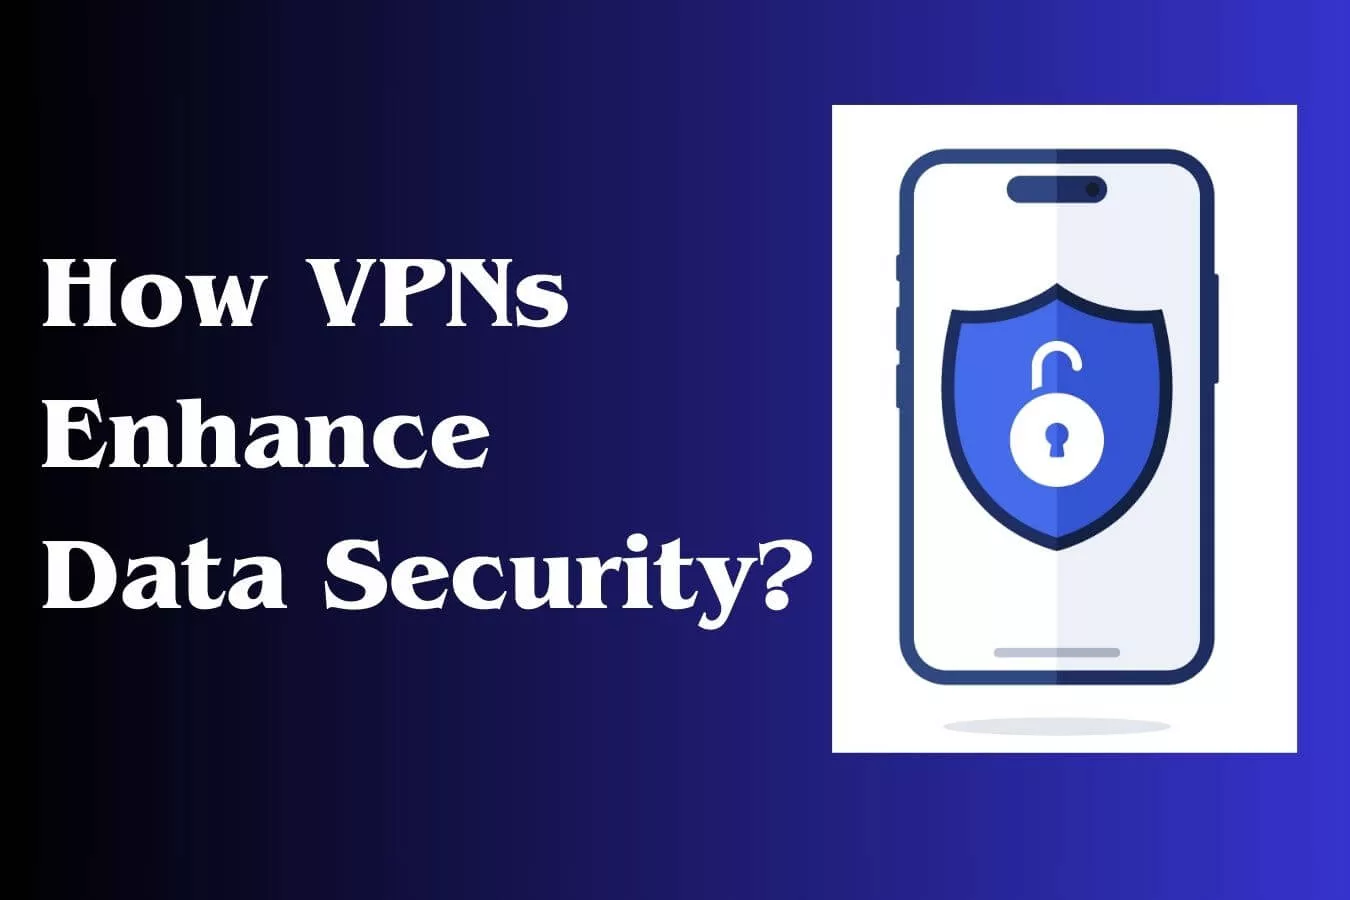 How VPNs Enhance Data Security?